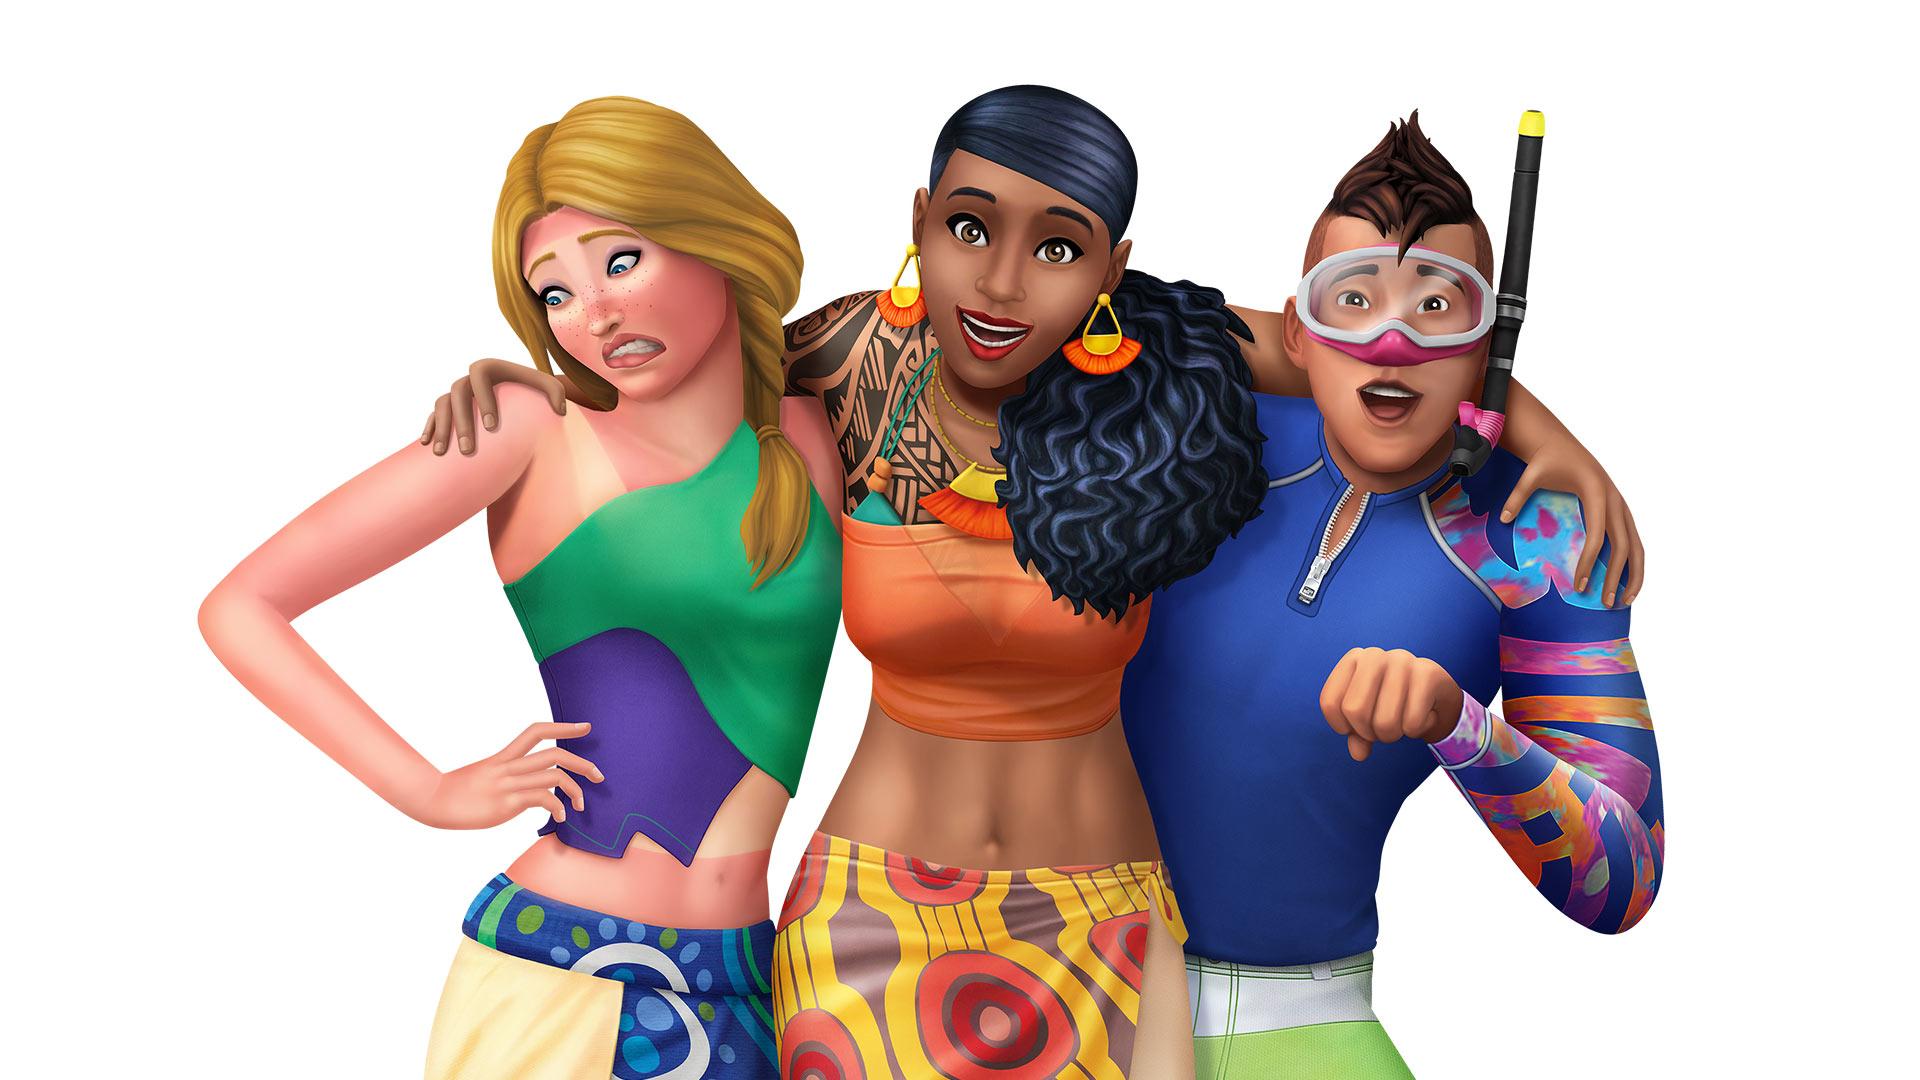 The Sims 4 Island Living Wallpaper, HD Games 4K Wallpaper, Image